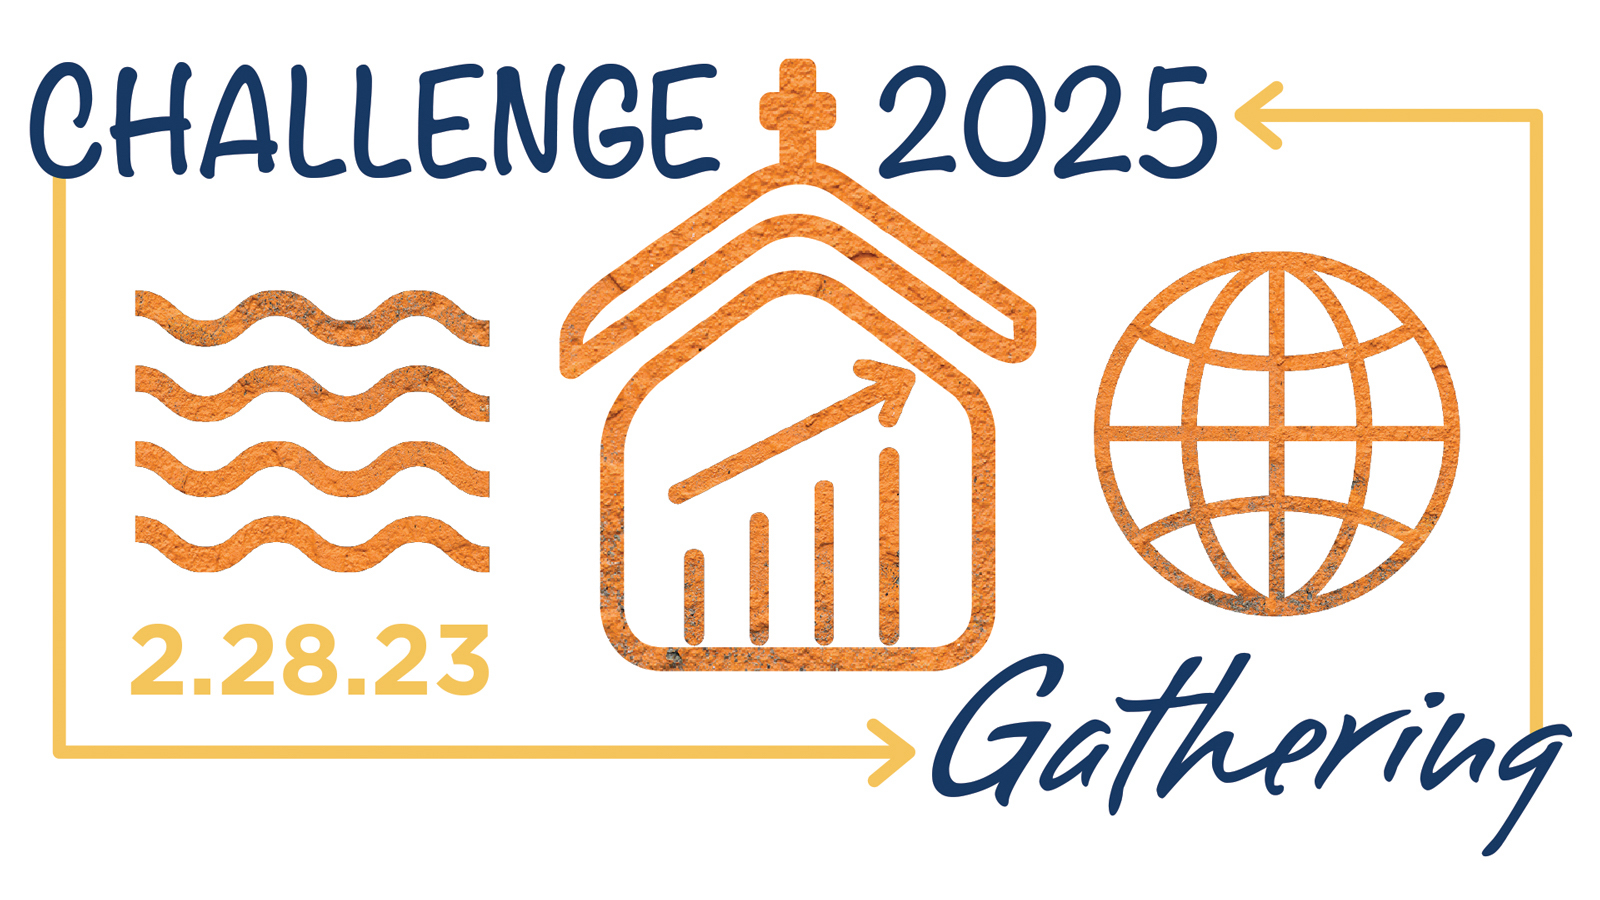 Challenge 2025 Gathering